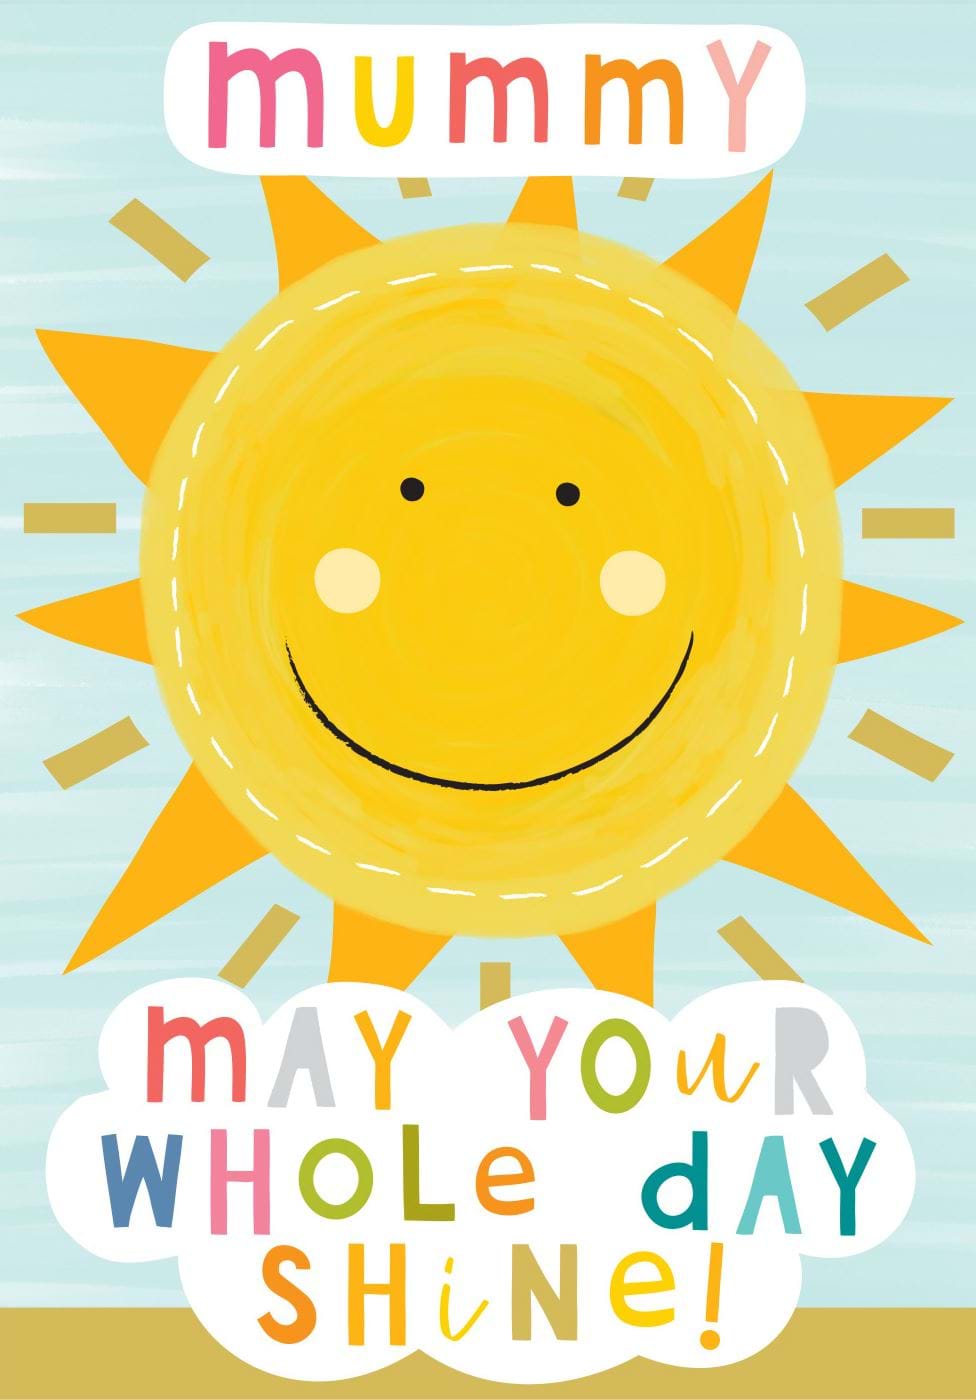 Sunshine Mother's Day Card